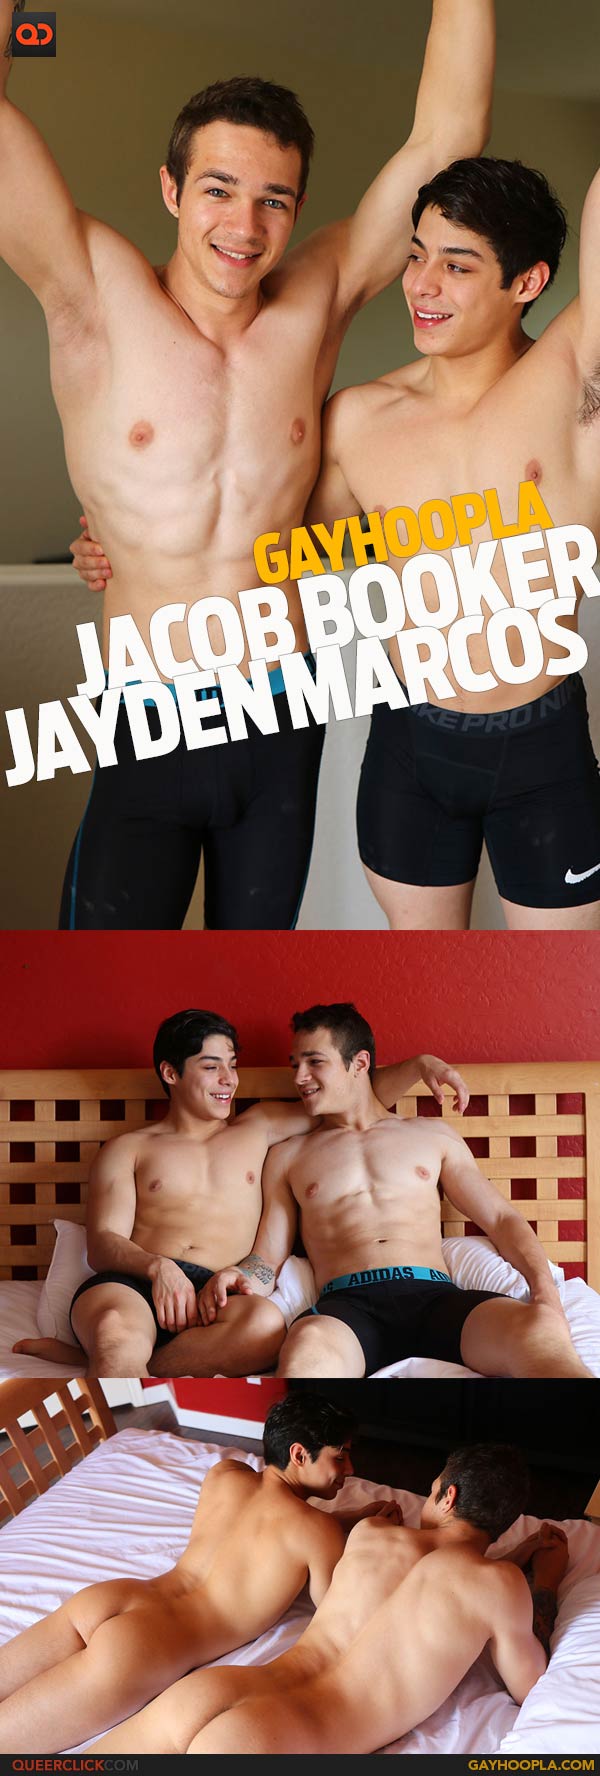 GayHoopla: Jacob Booker and Jayden Marcos